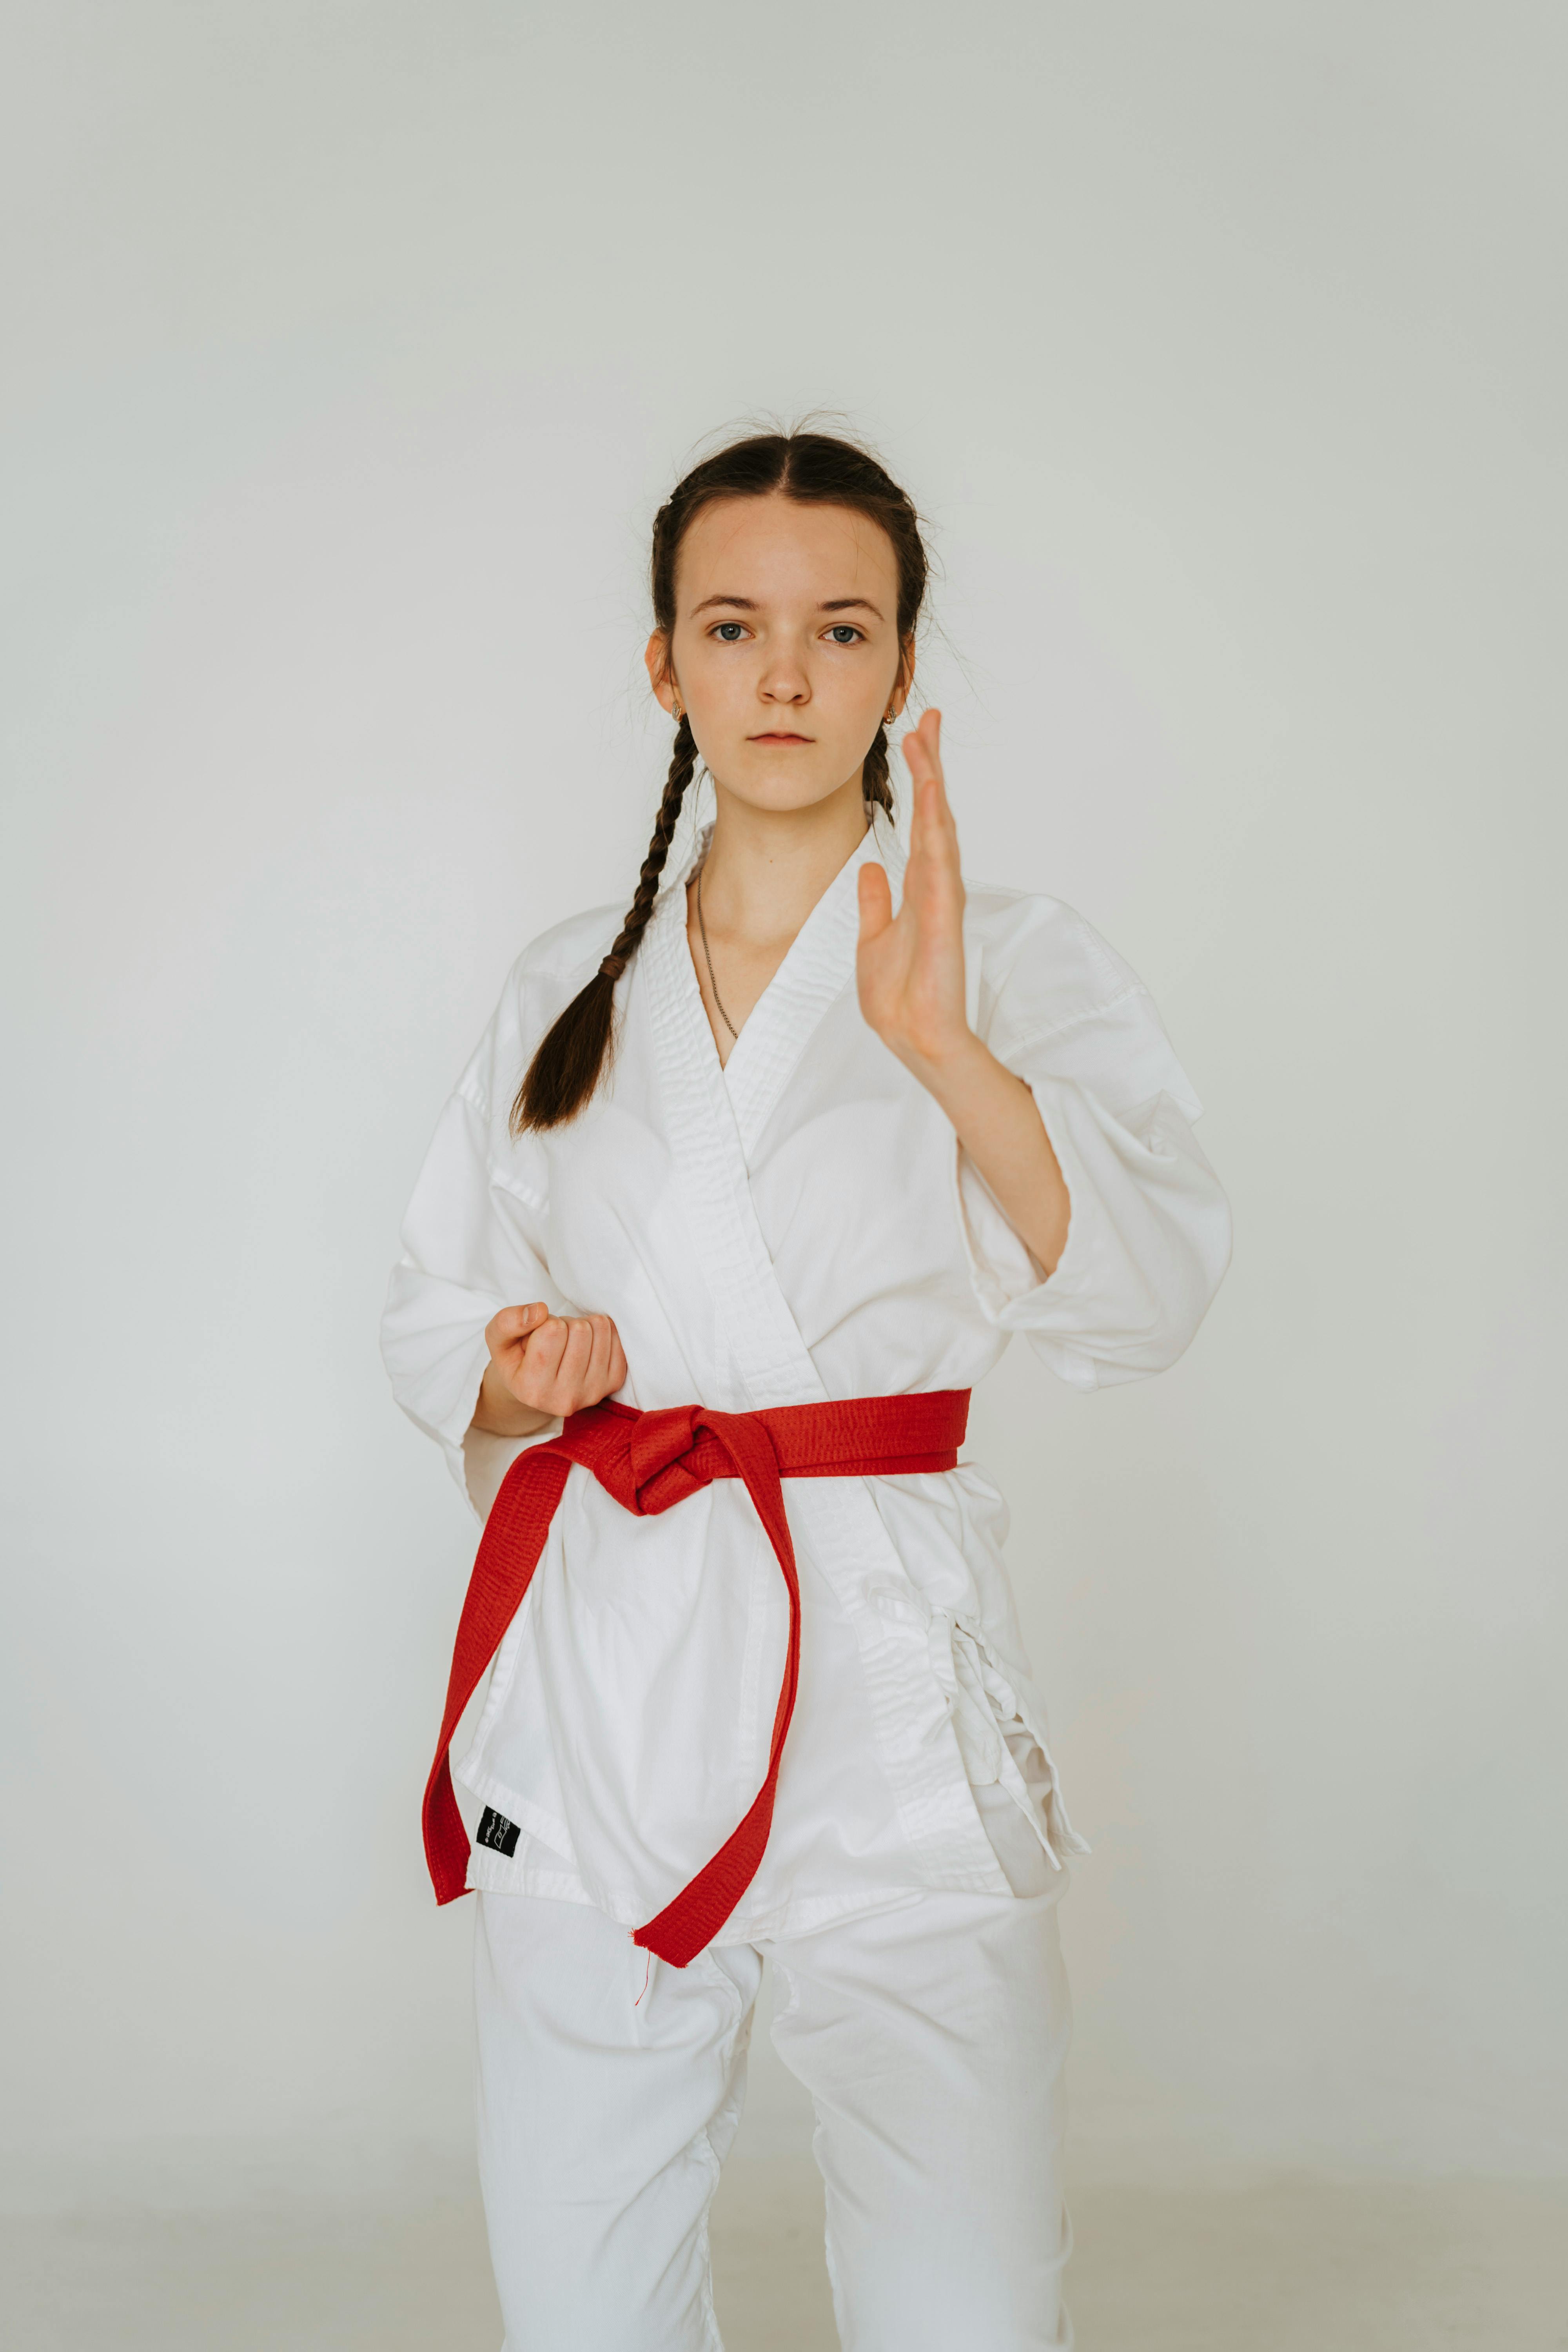 Karate kid pose Royalty Free Vector Image - VectorStock